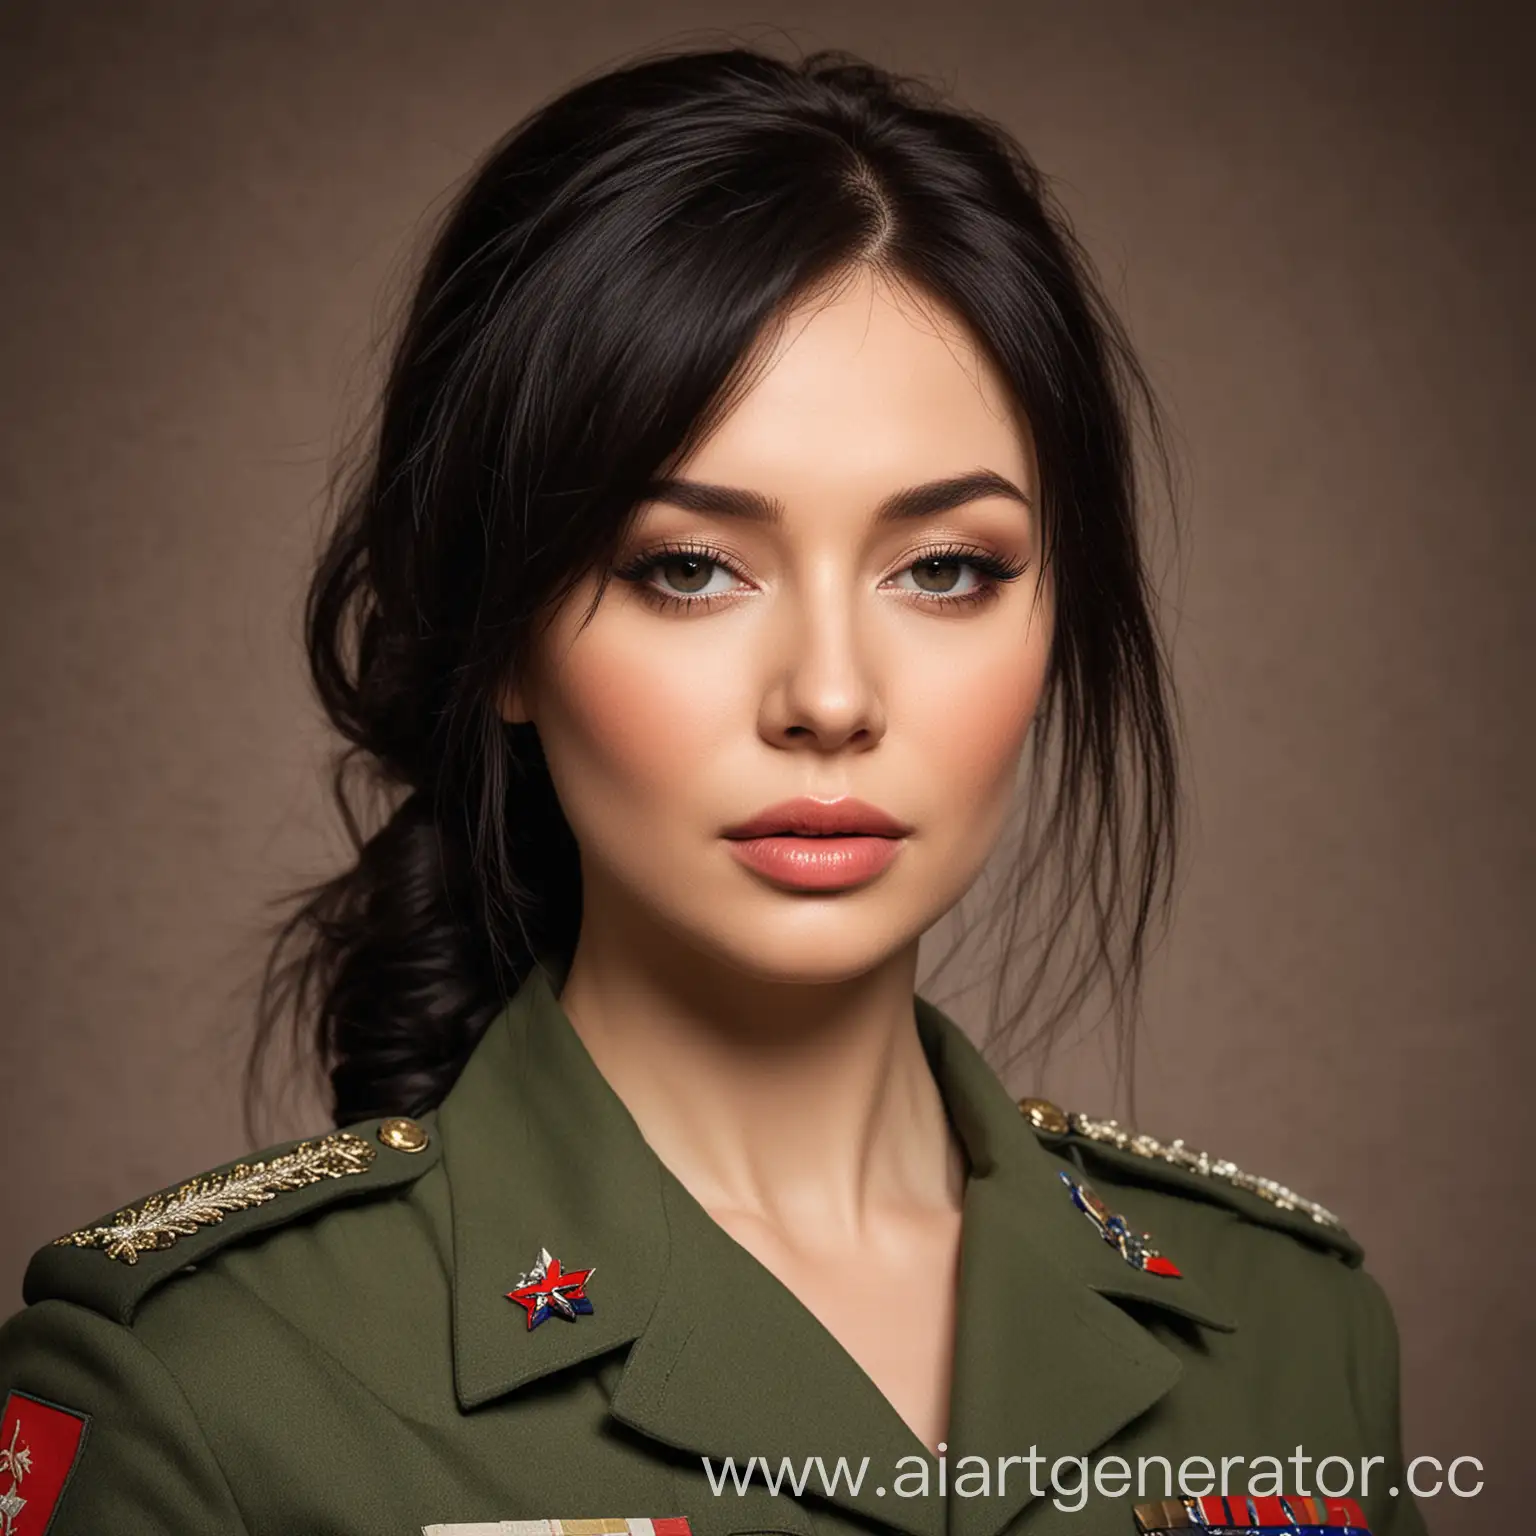 Russian-Singer-Dora-in-Military-Uniform-Artistic-Portrait